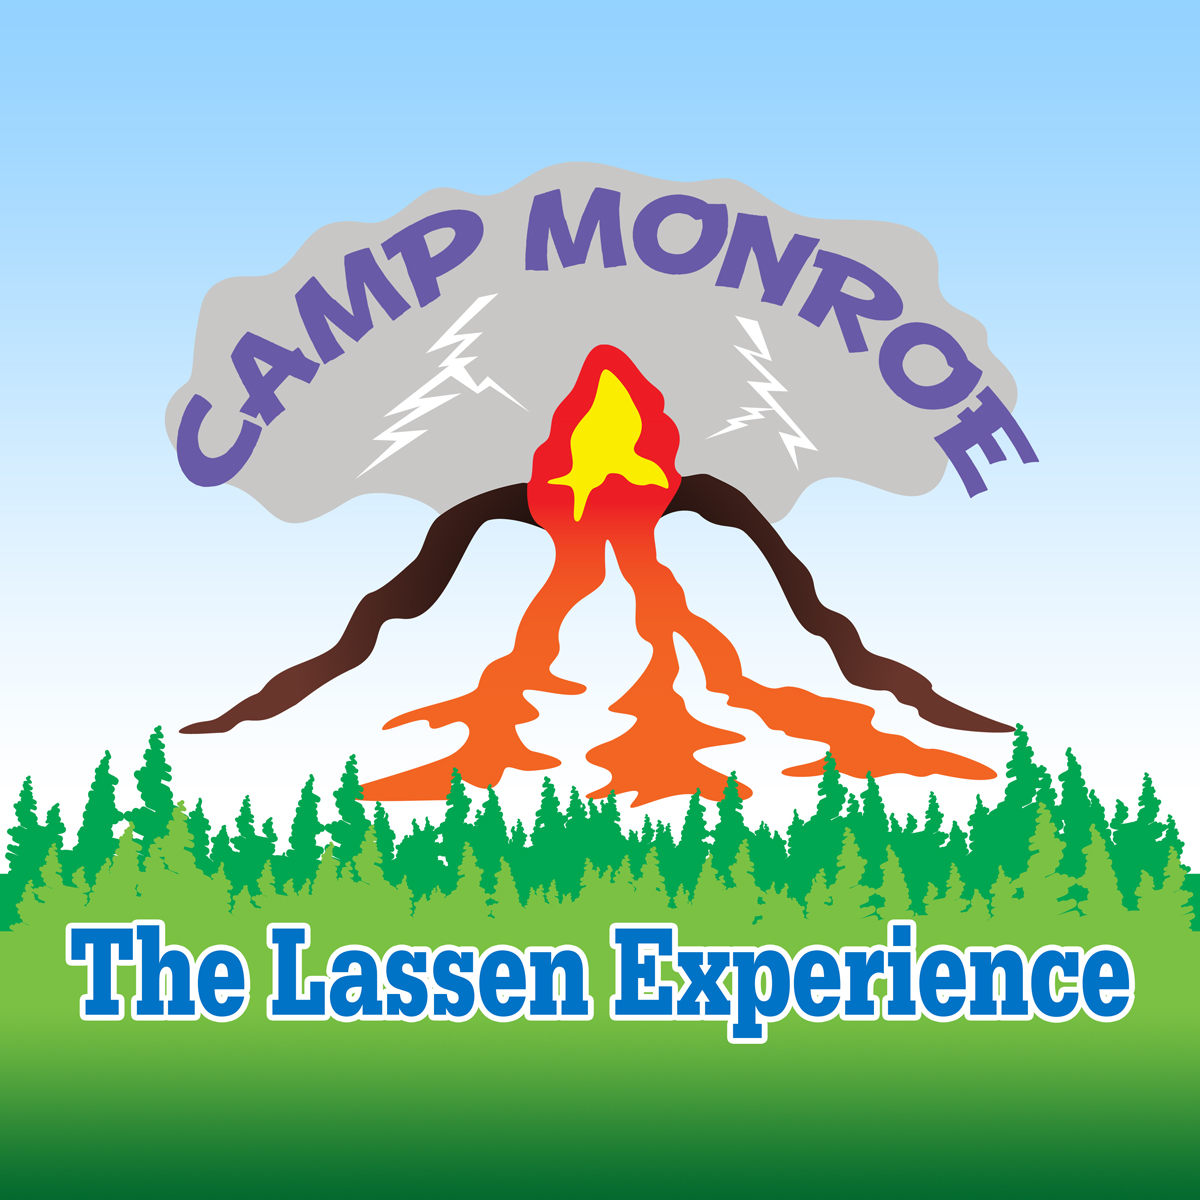 camp-moroe-logo-square.jpg